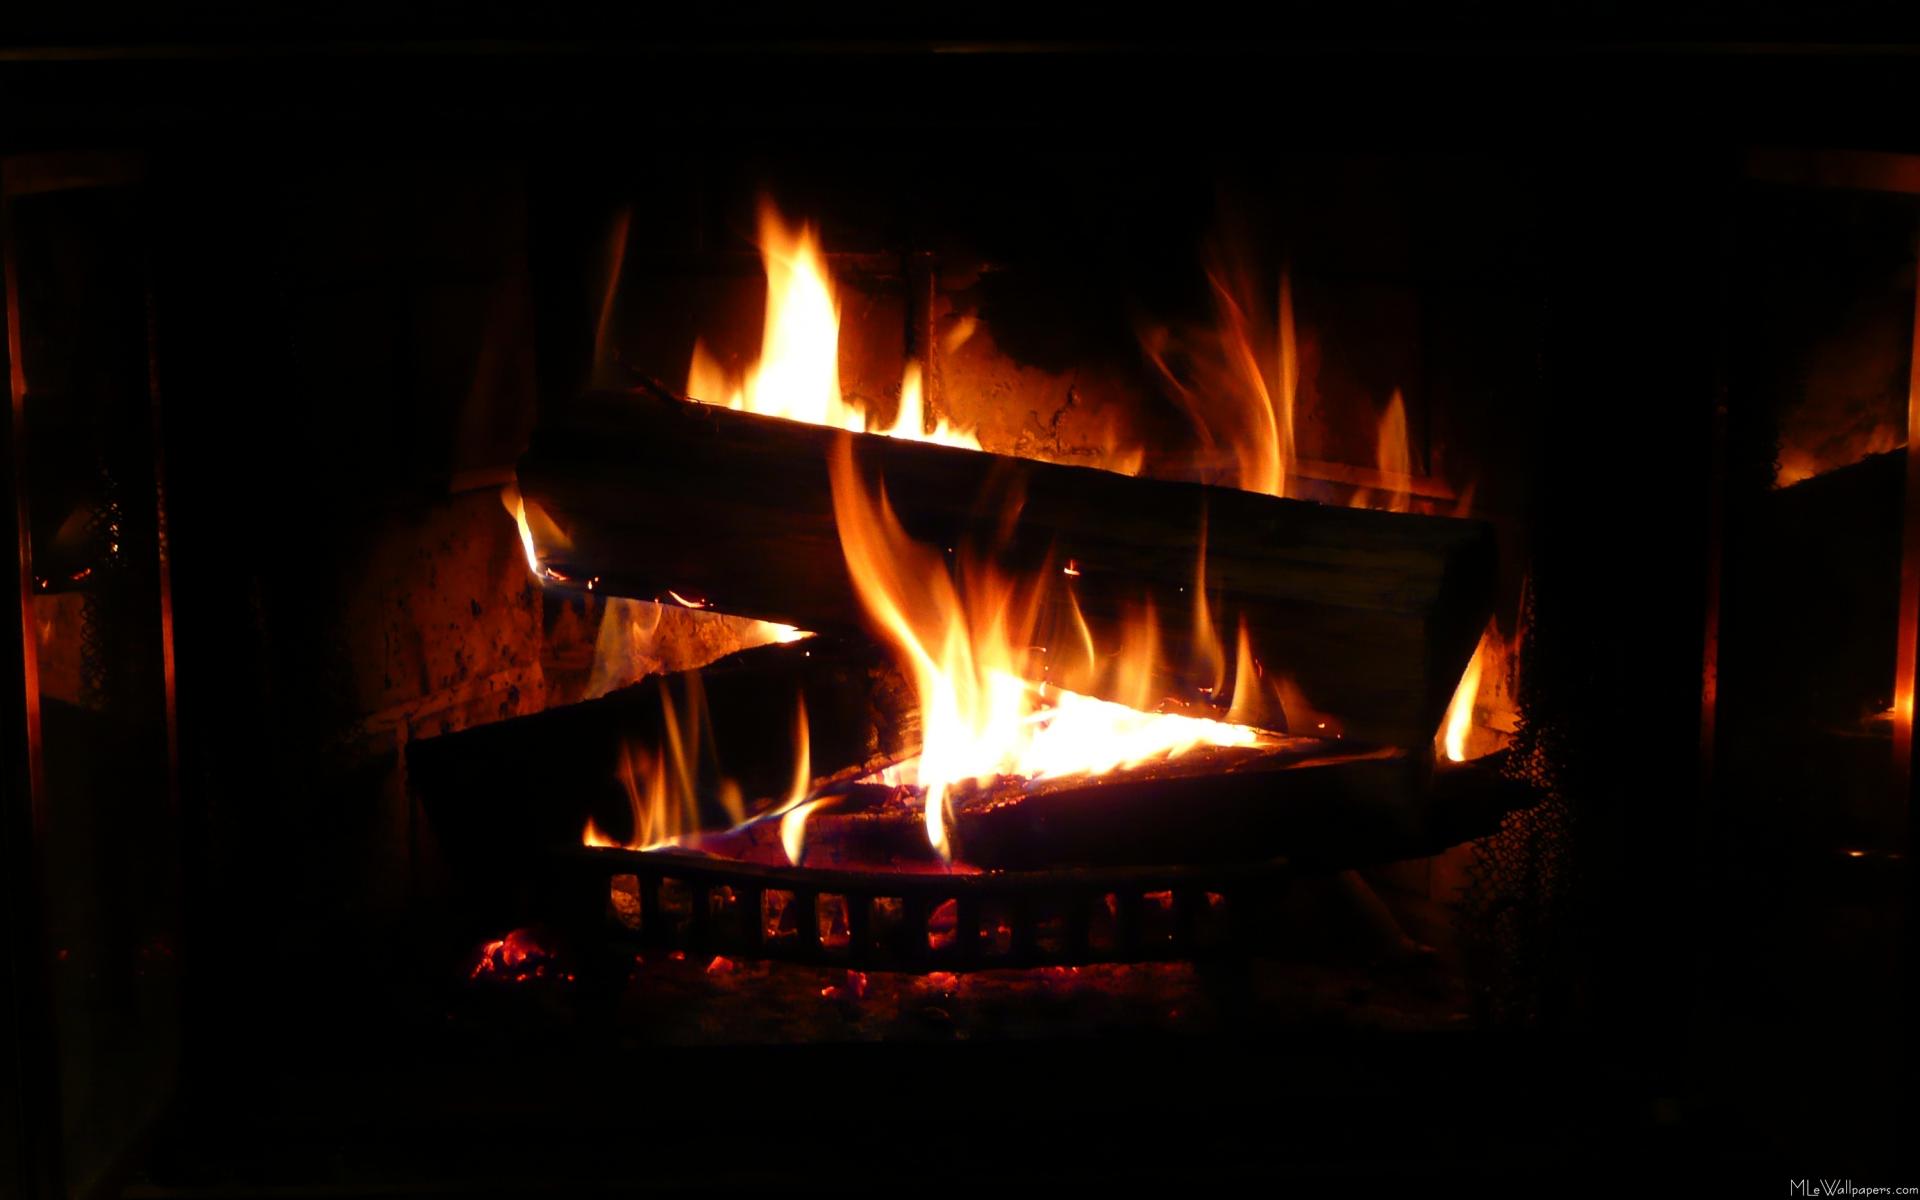 fireplace screensaver for mac free